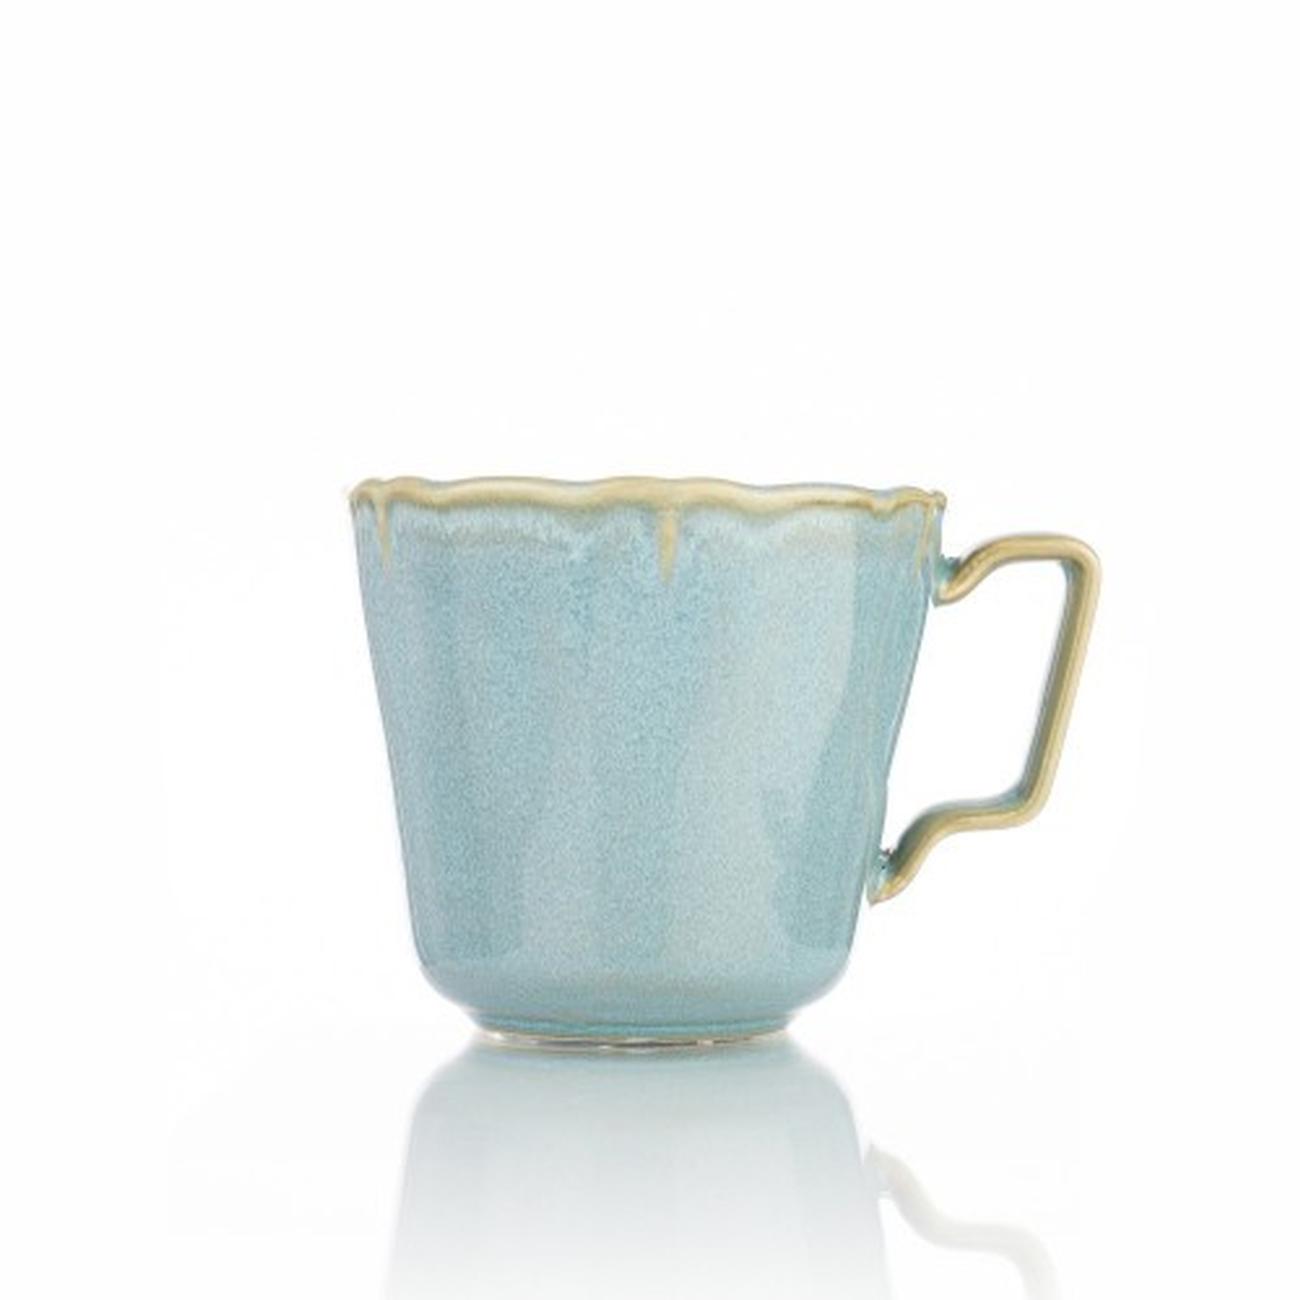 siip-sky-blue-reactive-glaze-scalloped-edge-mug - Siip Reactive Glaze Scalloped Edge Mug Sky Blue